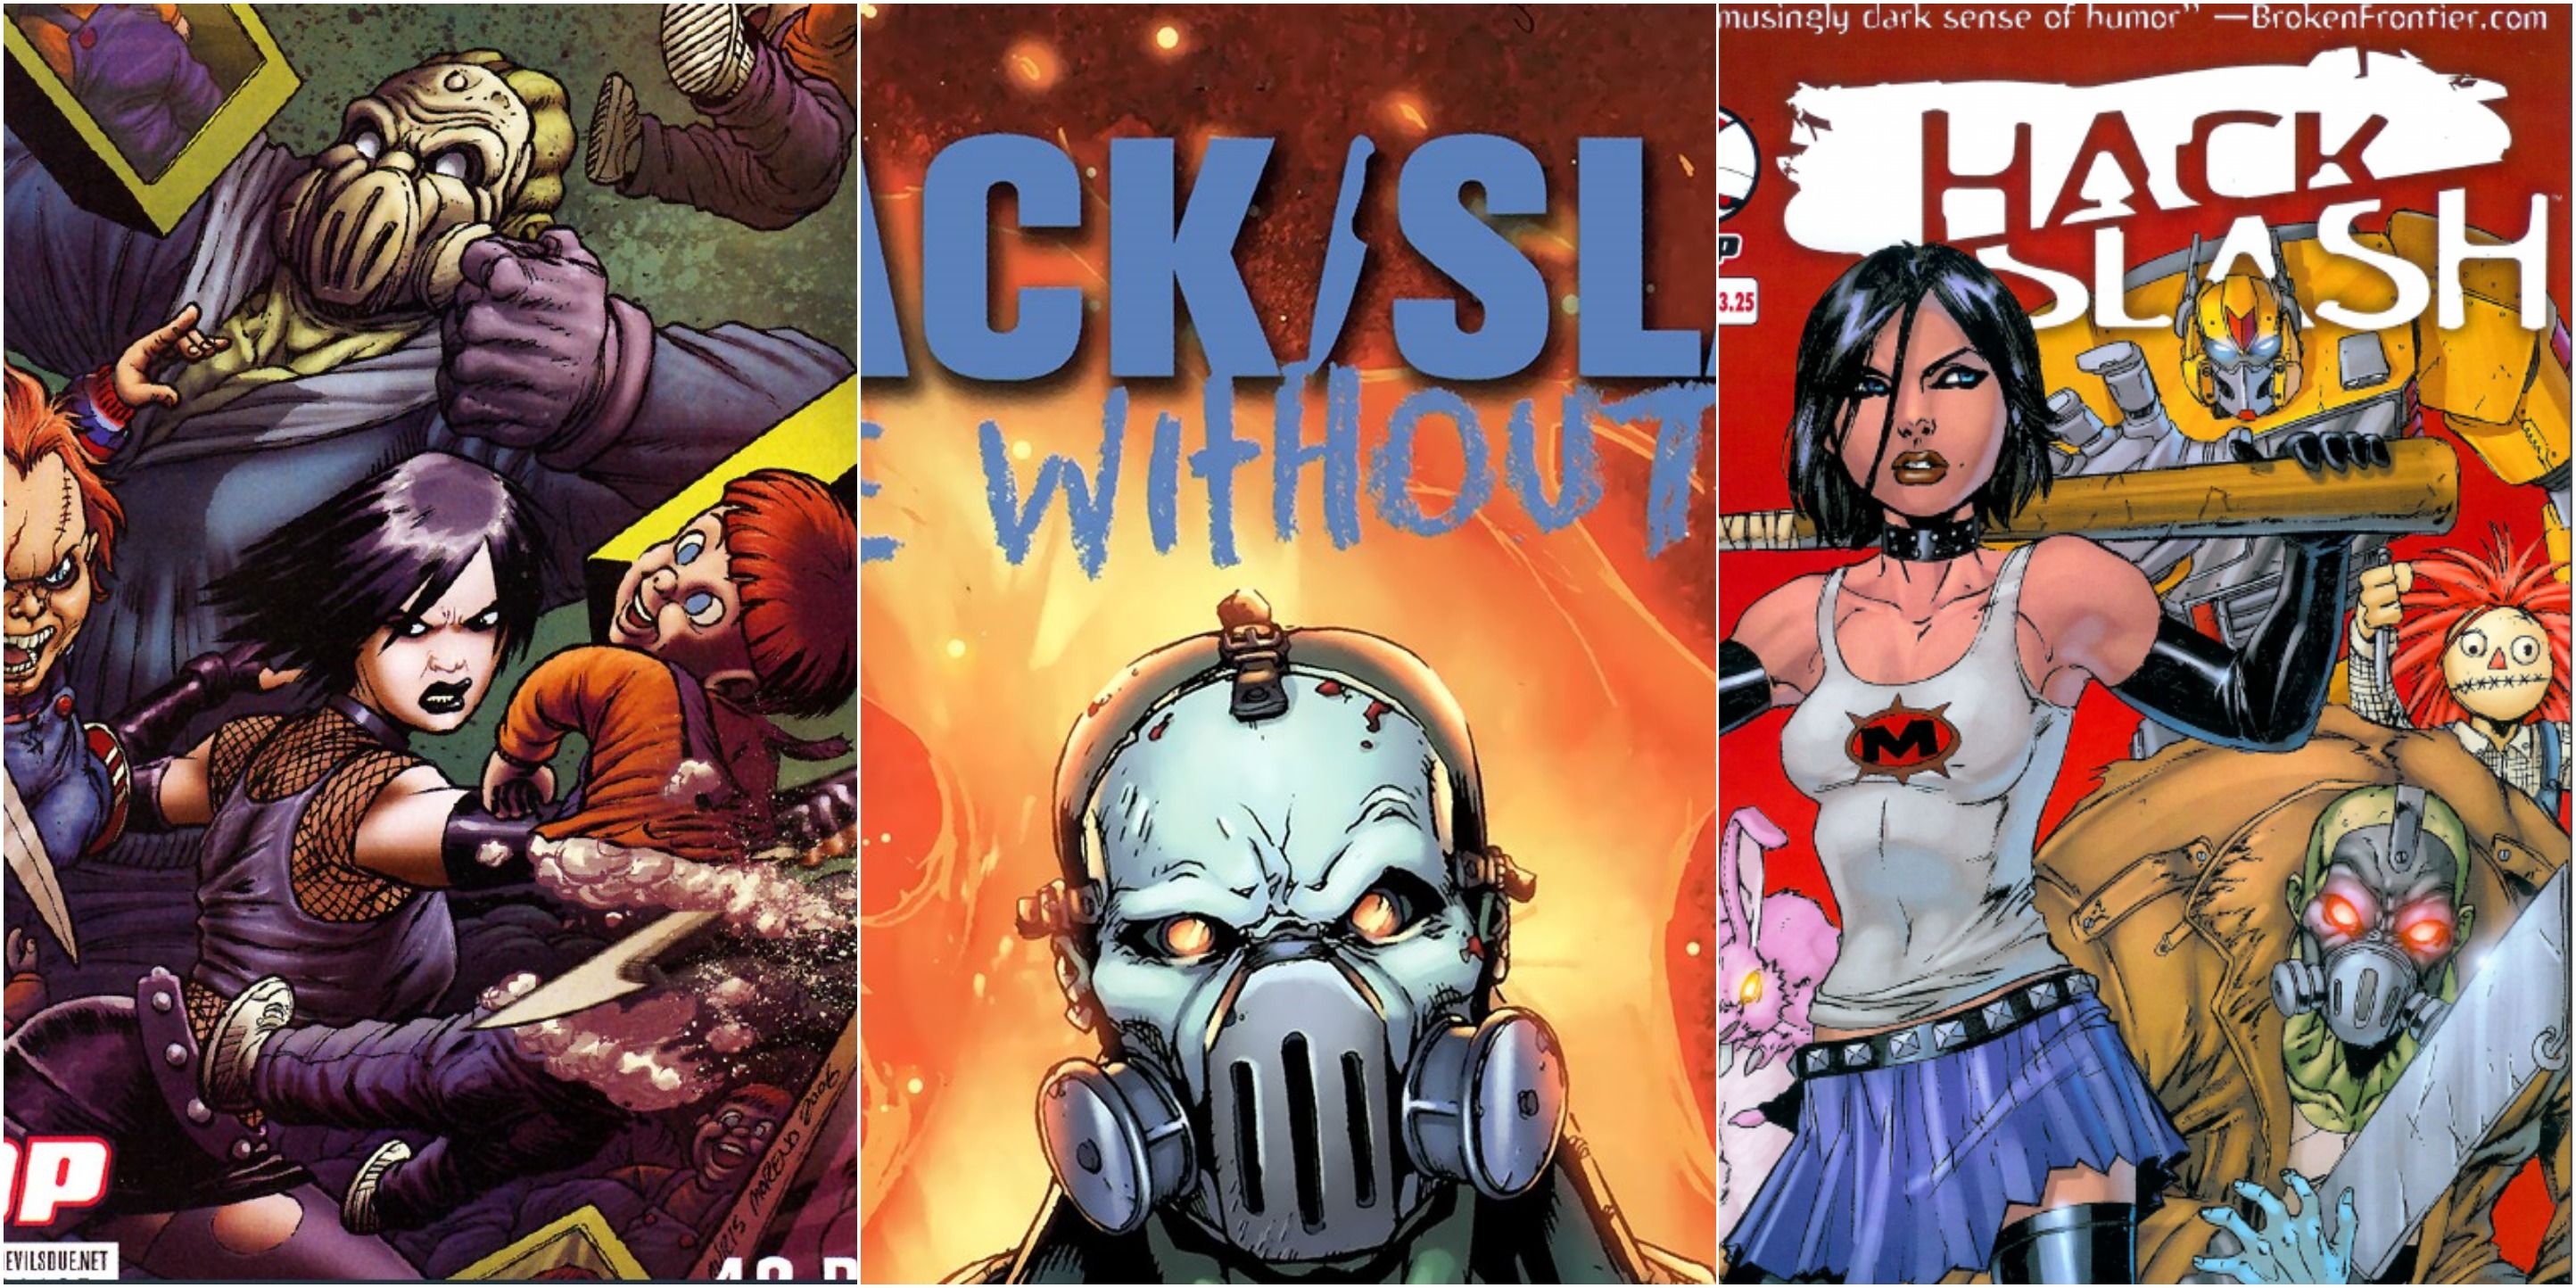 Hack Slash comics, Me Without You, Land of Lost Toys, Hack Slash vs Chucky